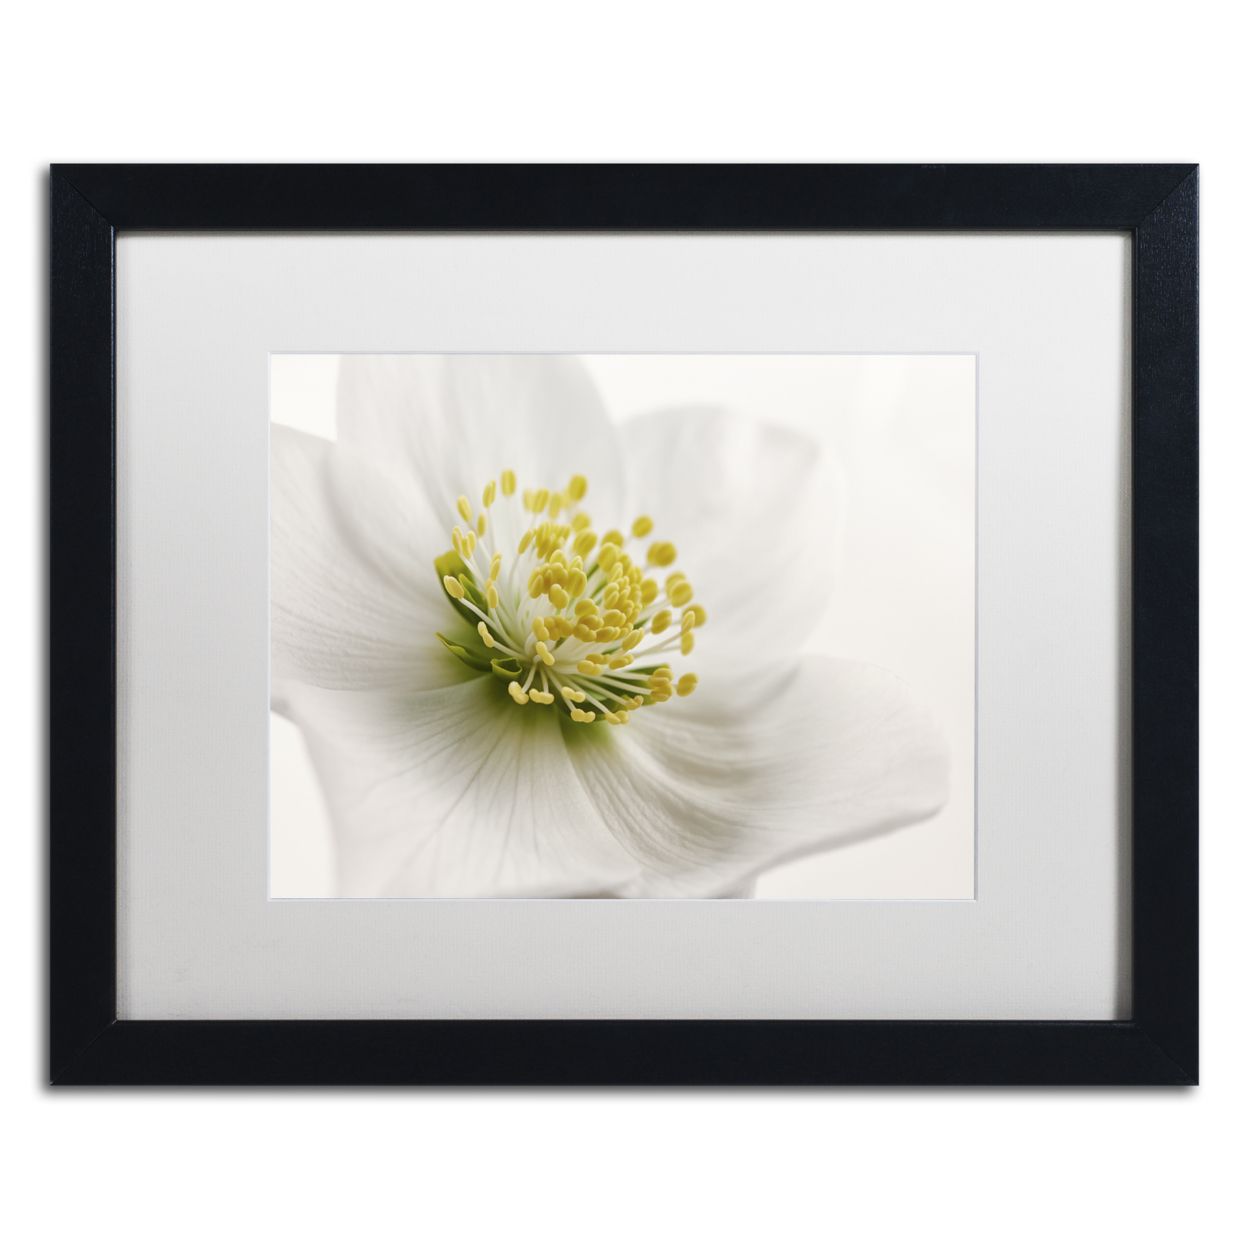 Cora Niele 'White Helleborus' Black Wooden Framed Art 18 X 22 Inches